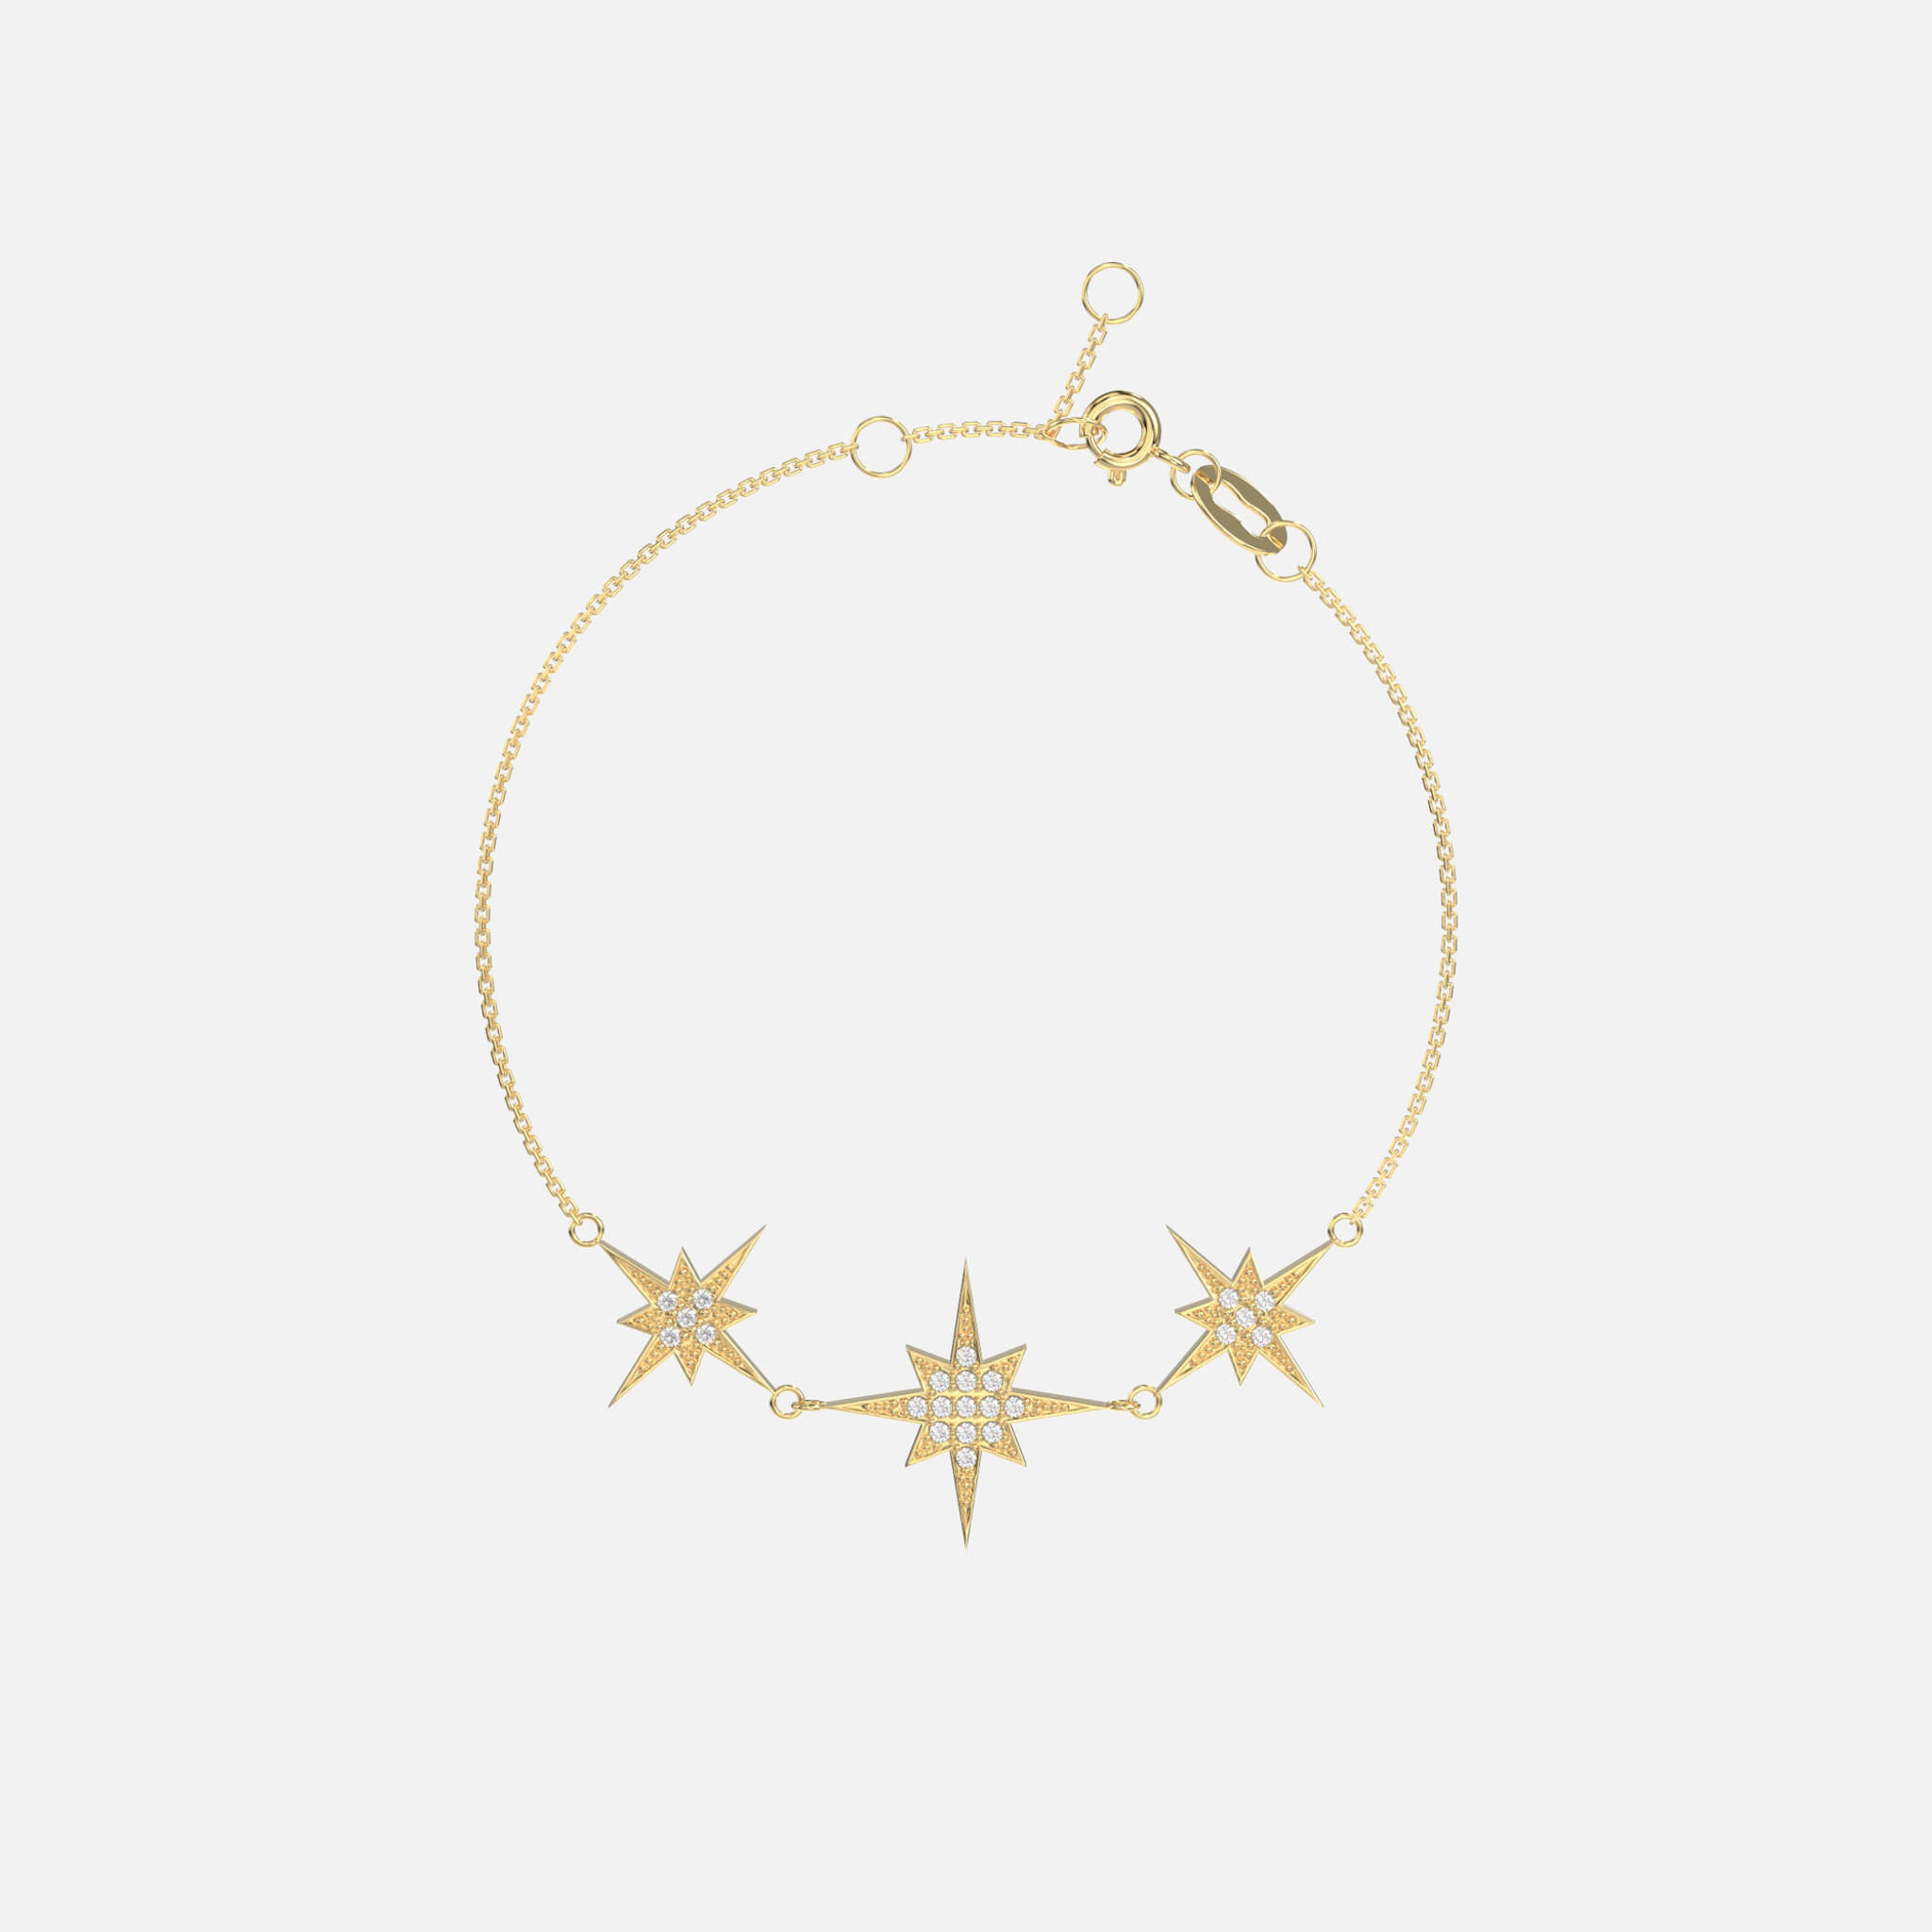 Diamond Star Bracelet: Captivating 14k gold with three dazzling north star pendants.